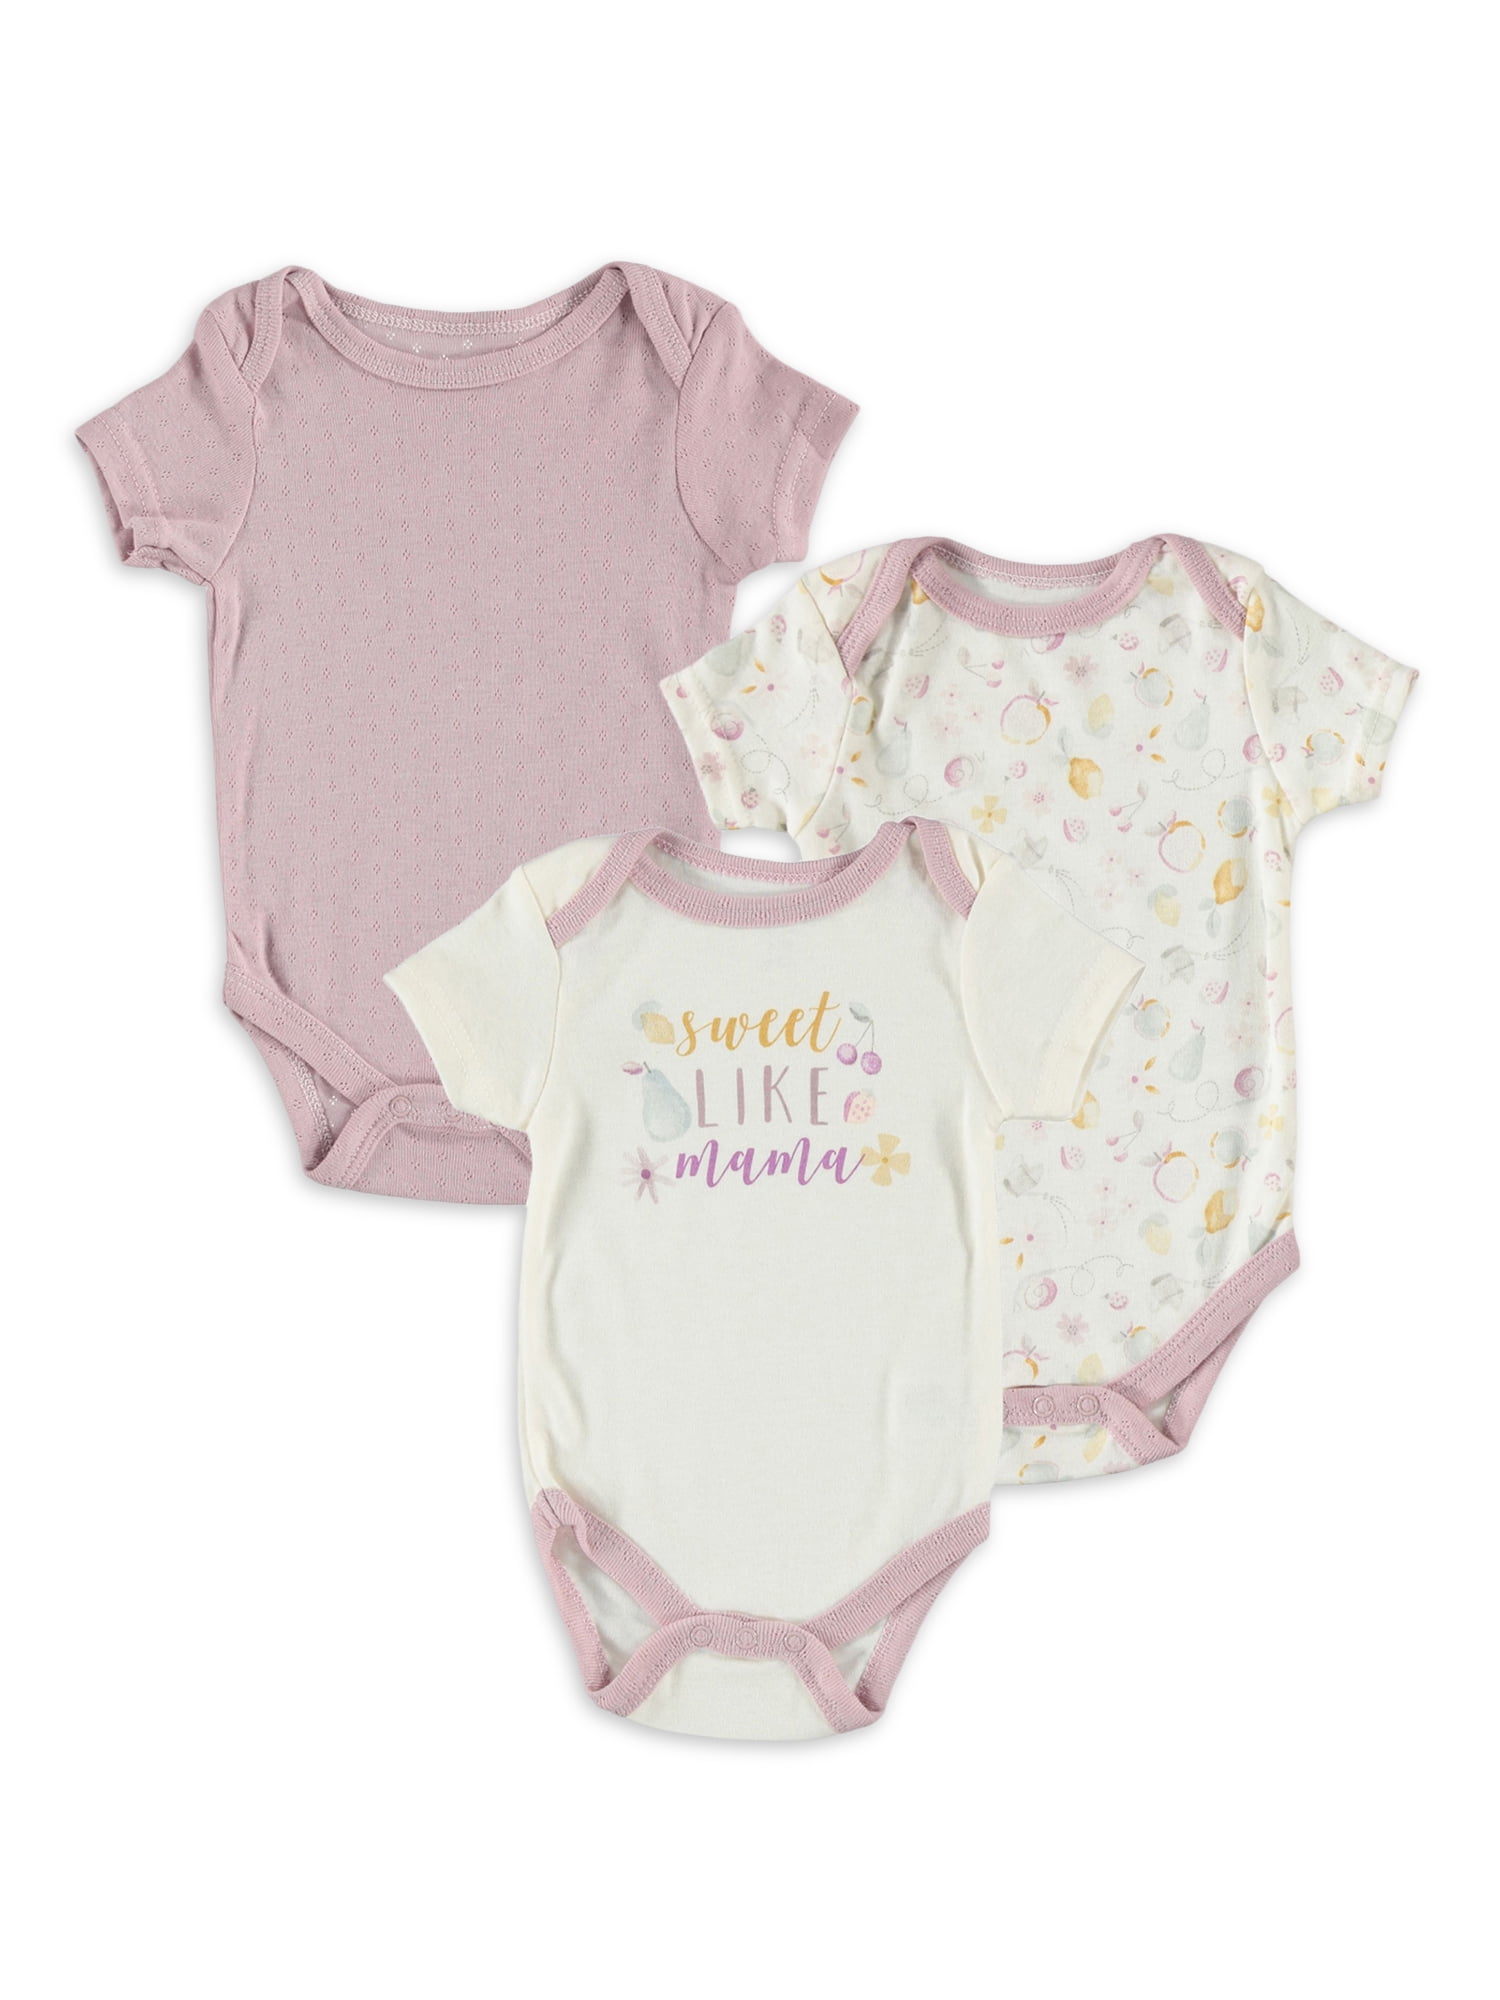 Kyle & Deena Baby Girl 3 PK Bodysuits, Sizes Newborn-9 Months - Walmart.com